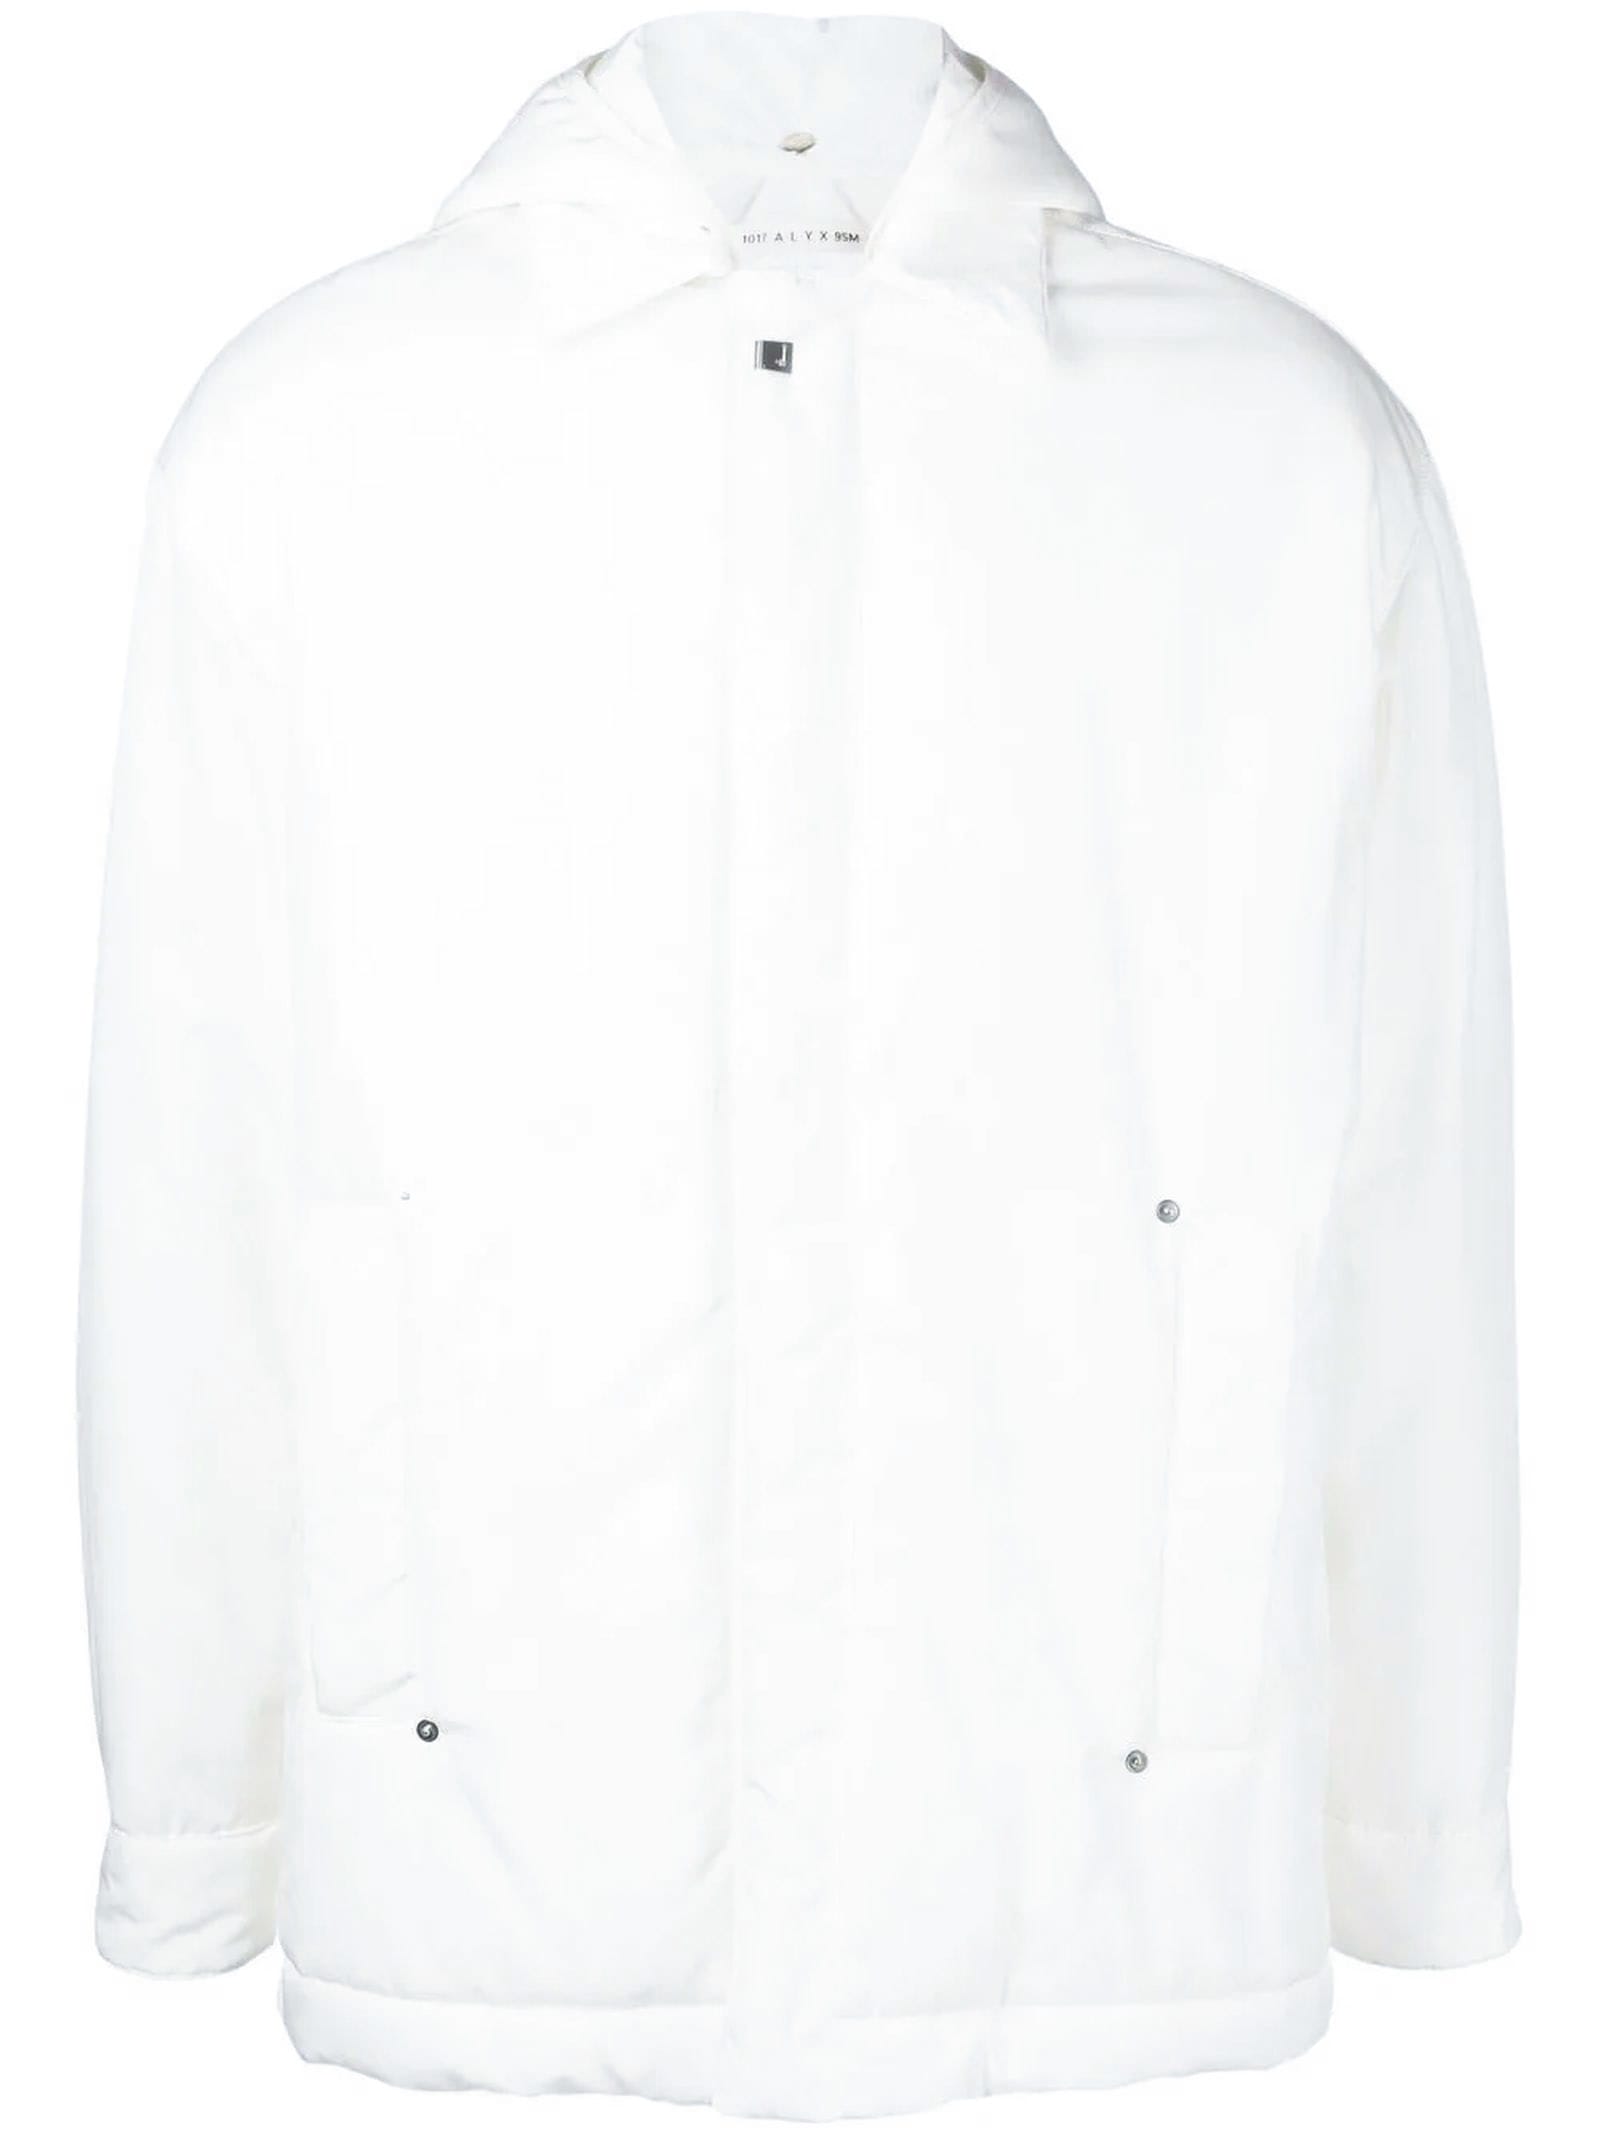 1017 ALYX 9SM White Cotton Blend Padded Hooded Jacket